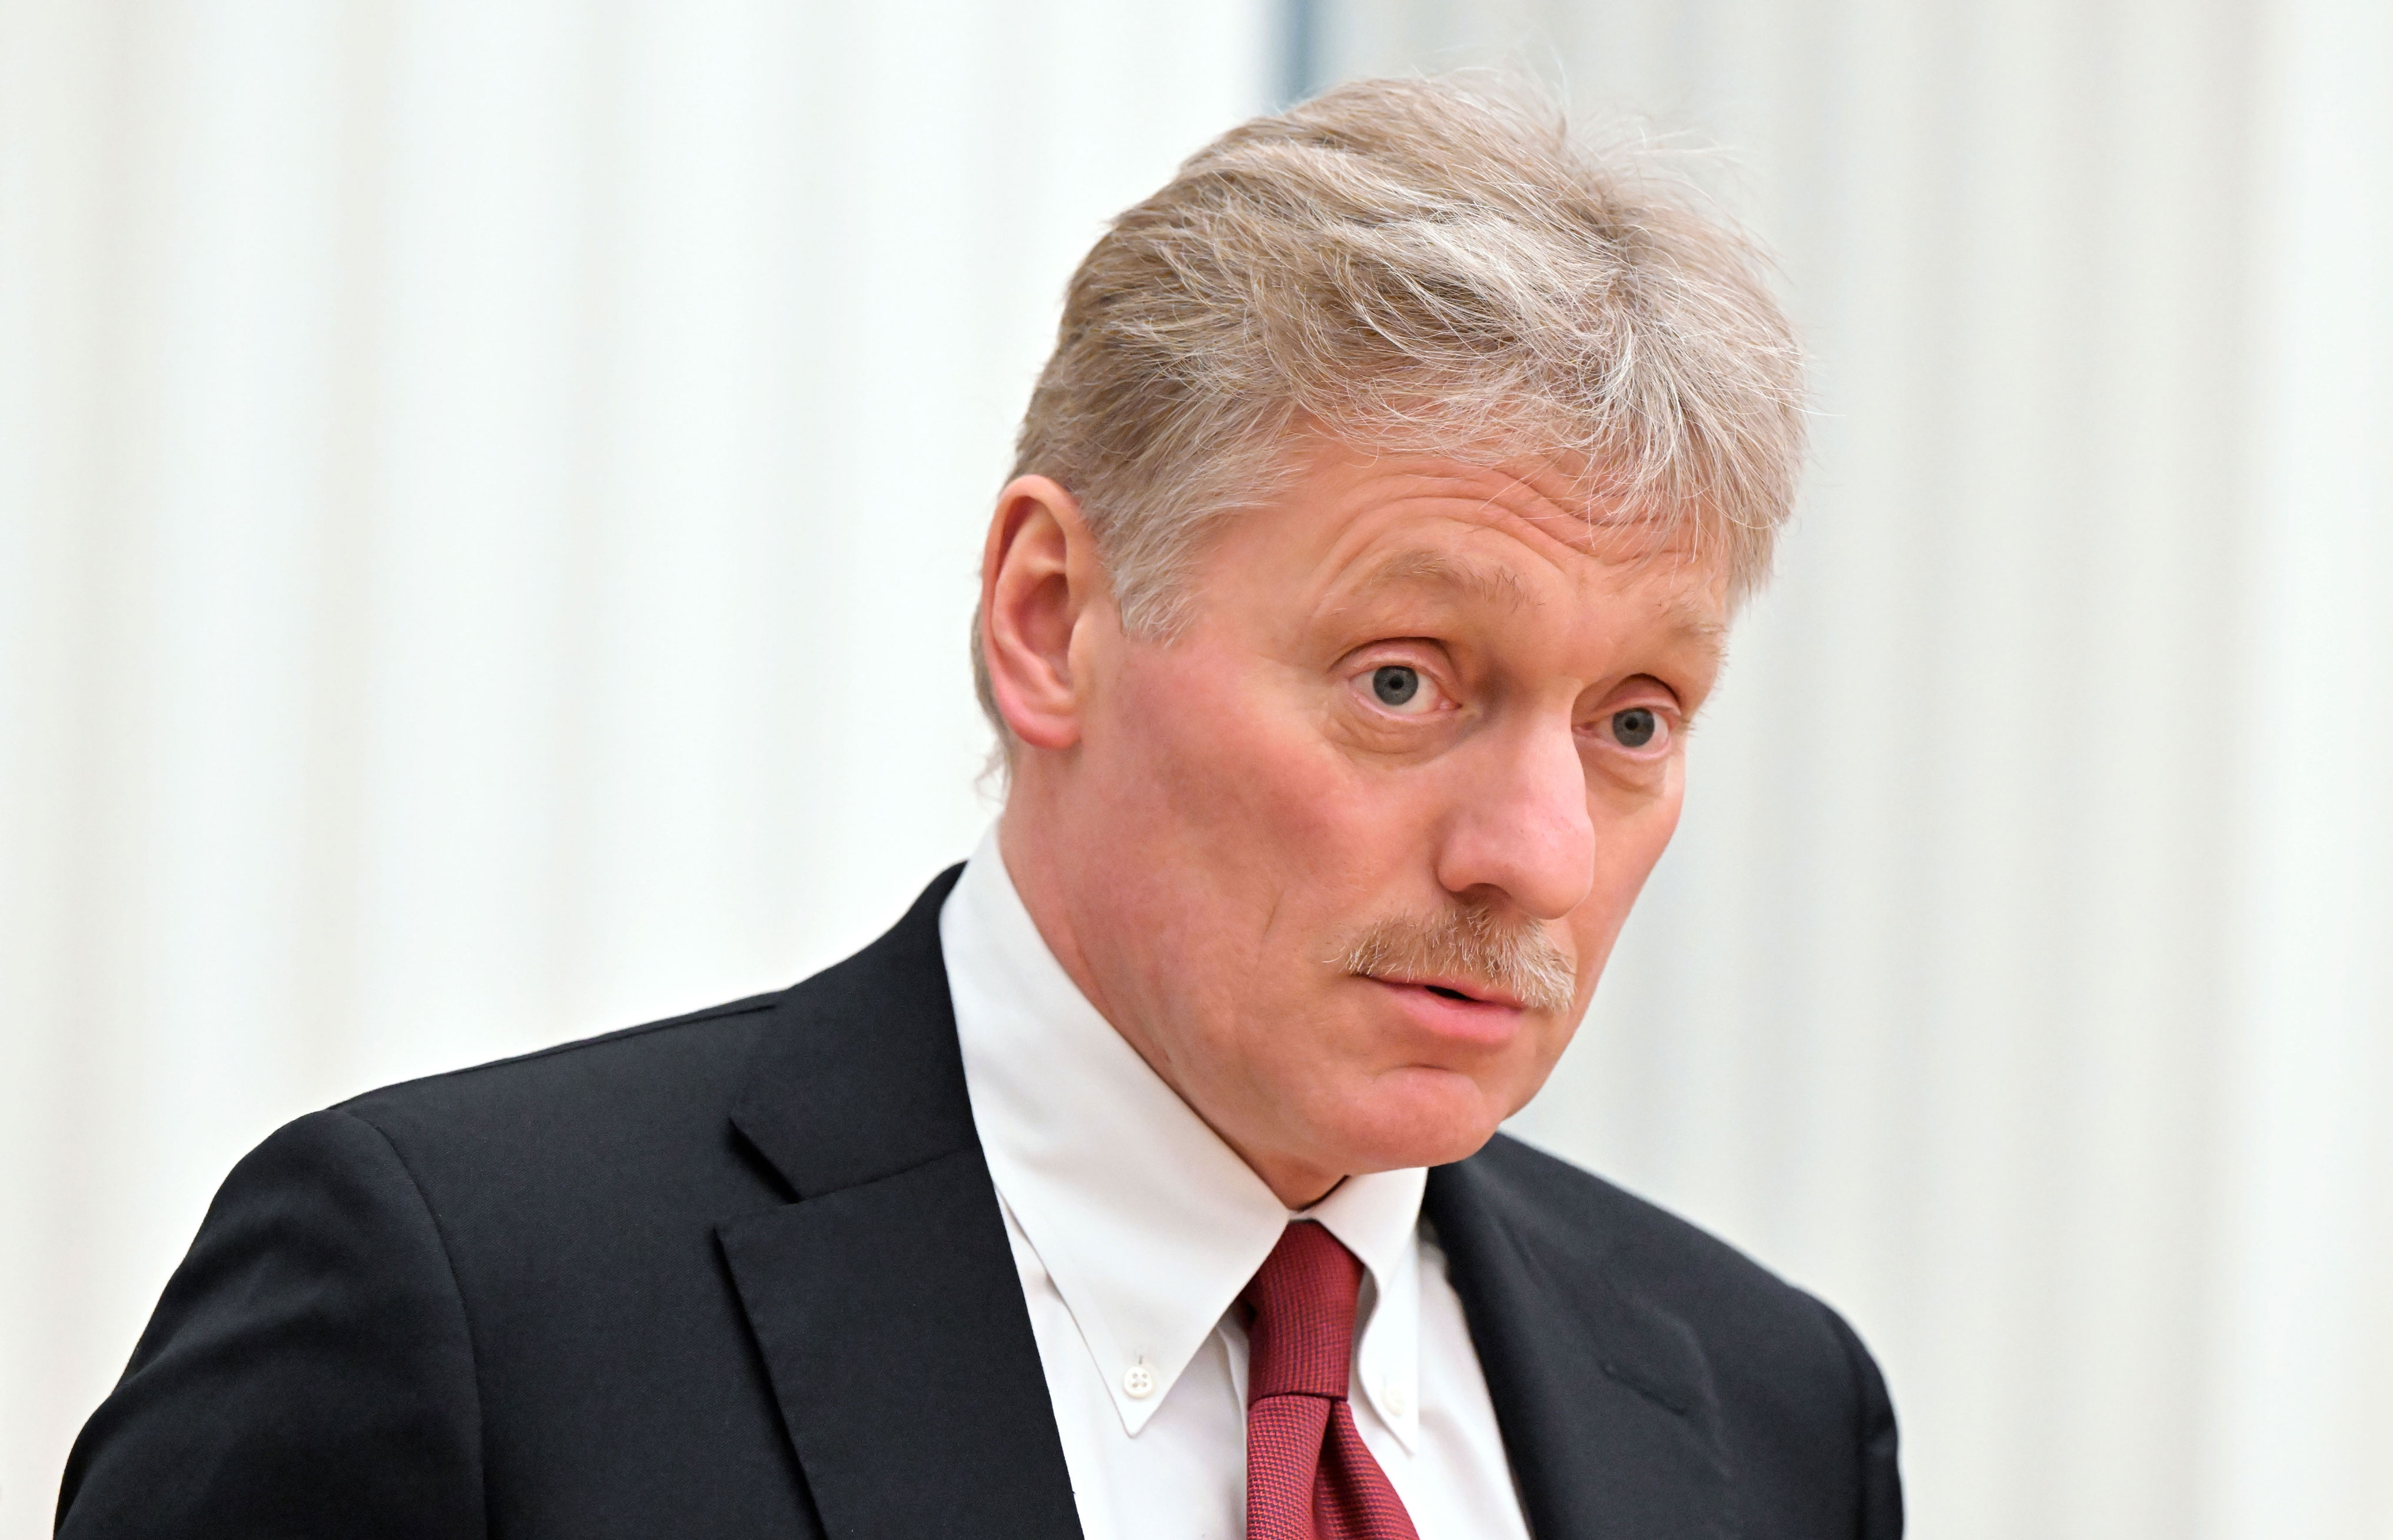 Kremlin spokesman Dmitry Peskov is seen speaking at a press conference in Moscow on Feb. 18.